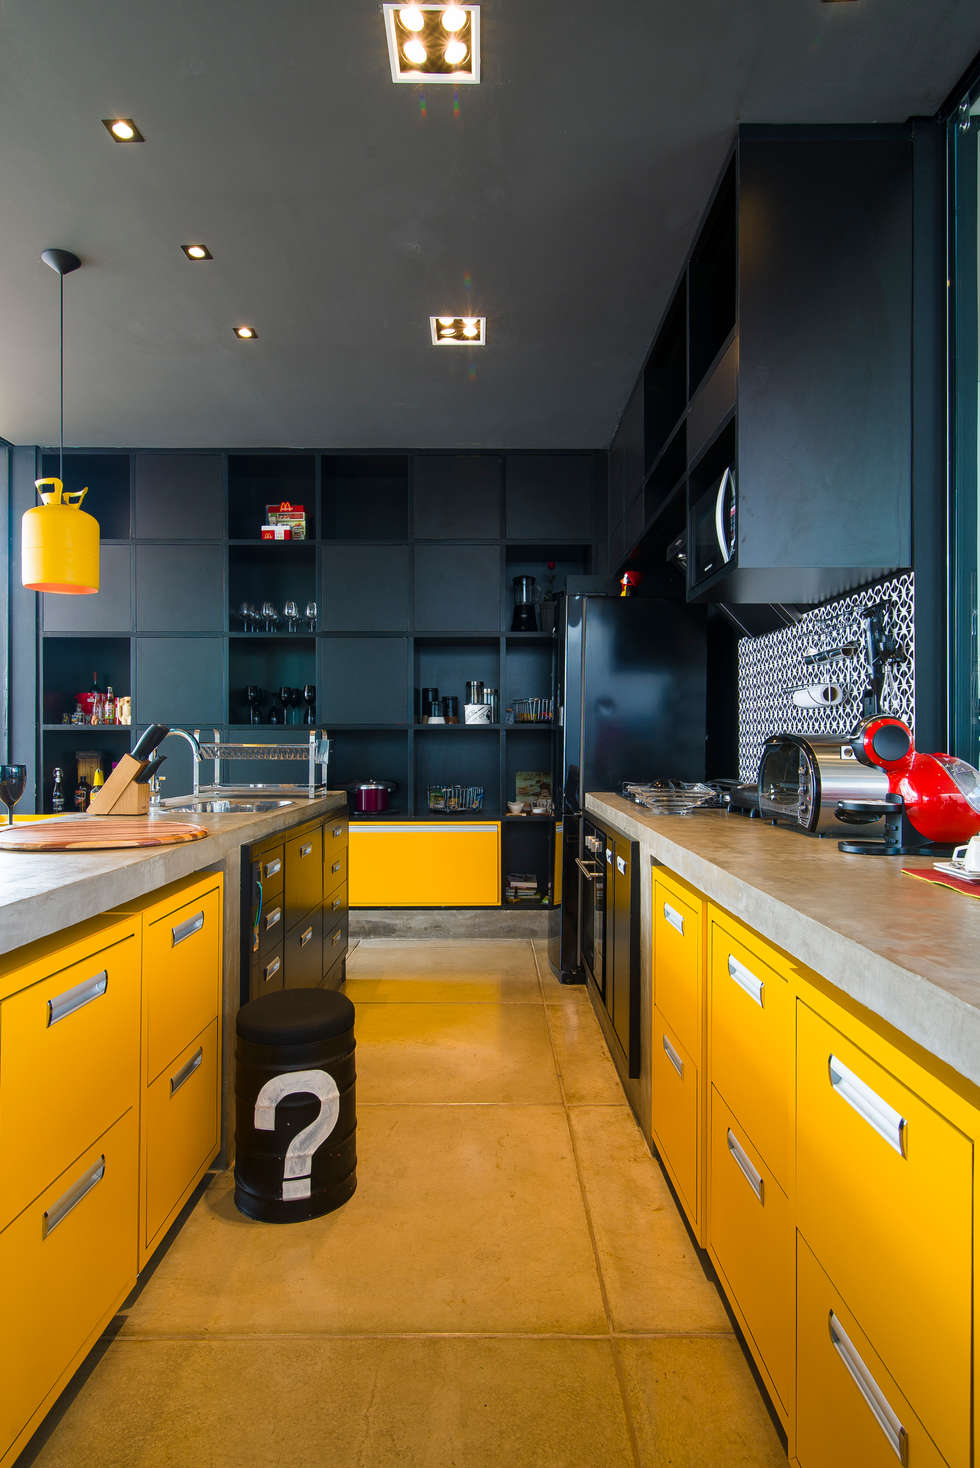 Желто черная кухня